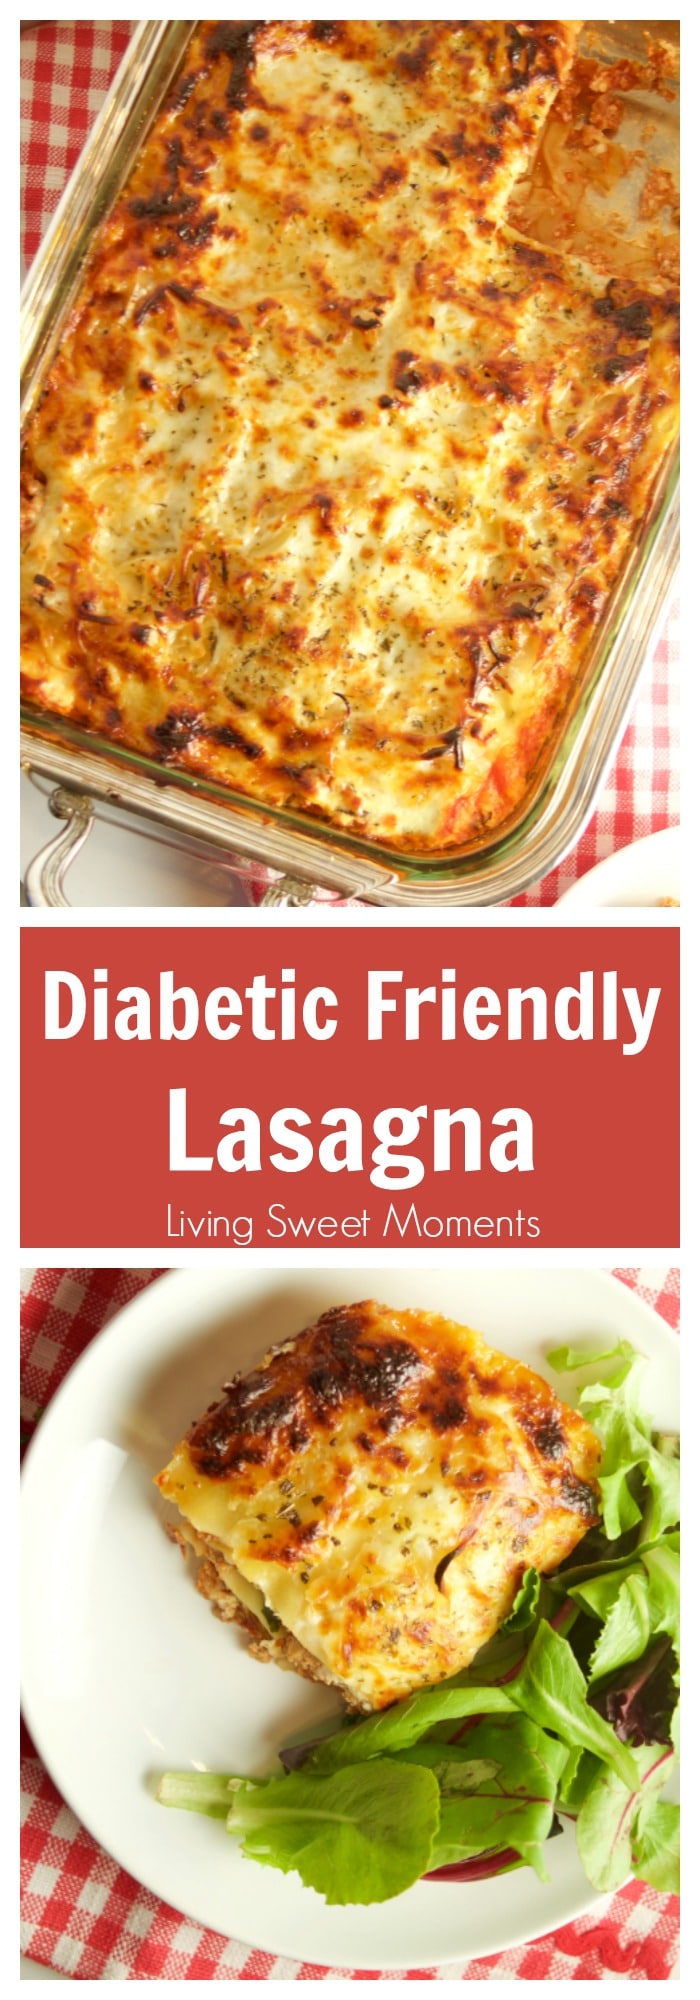 Diabetic Lasagna Recipe - Living Sweet Moments